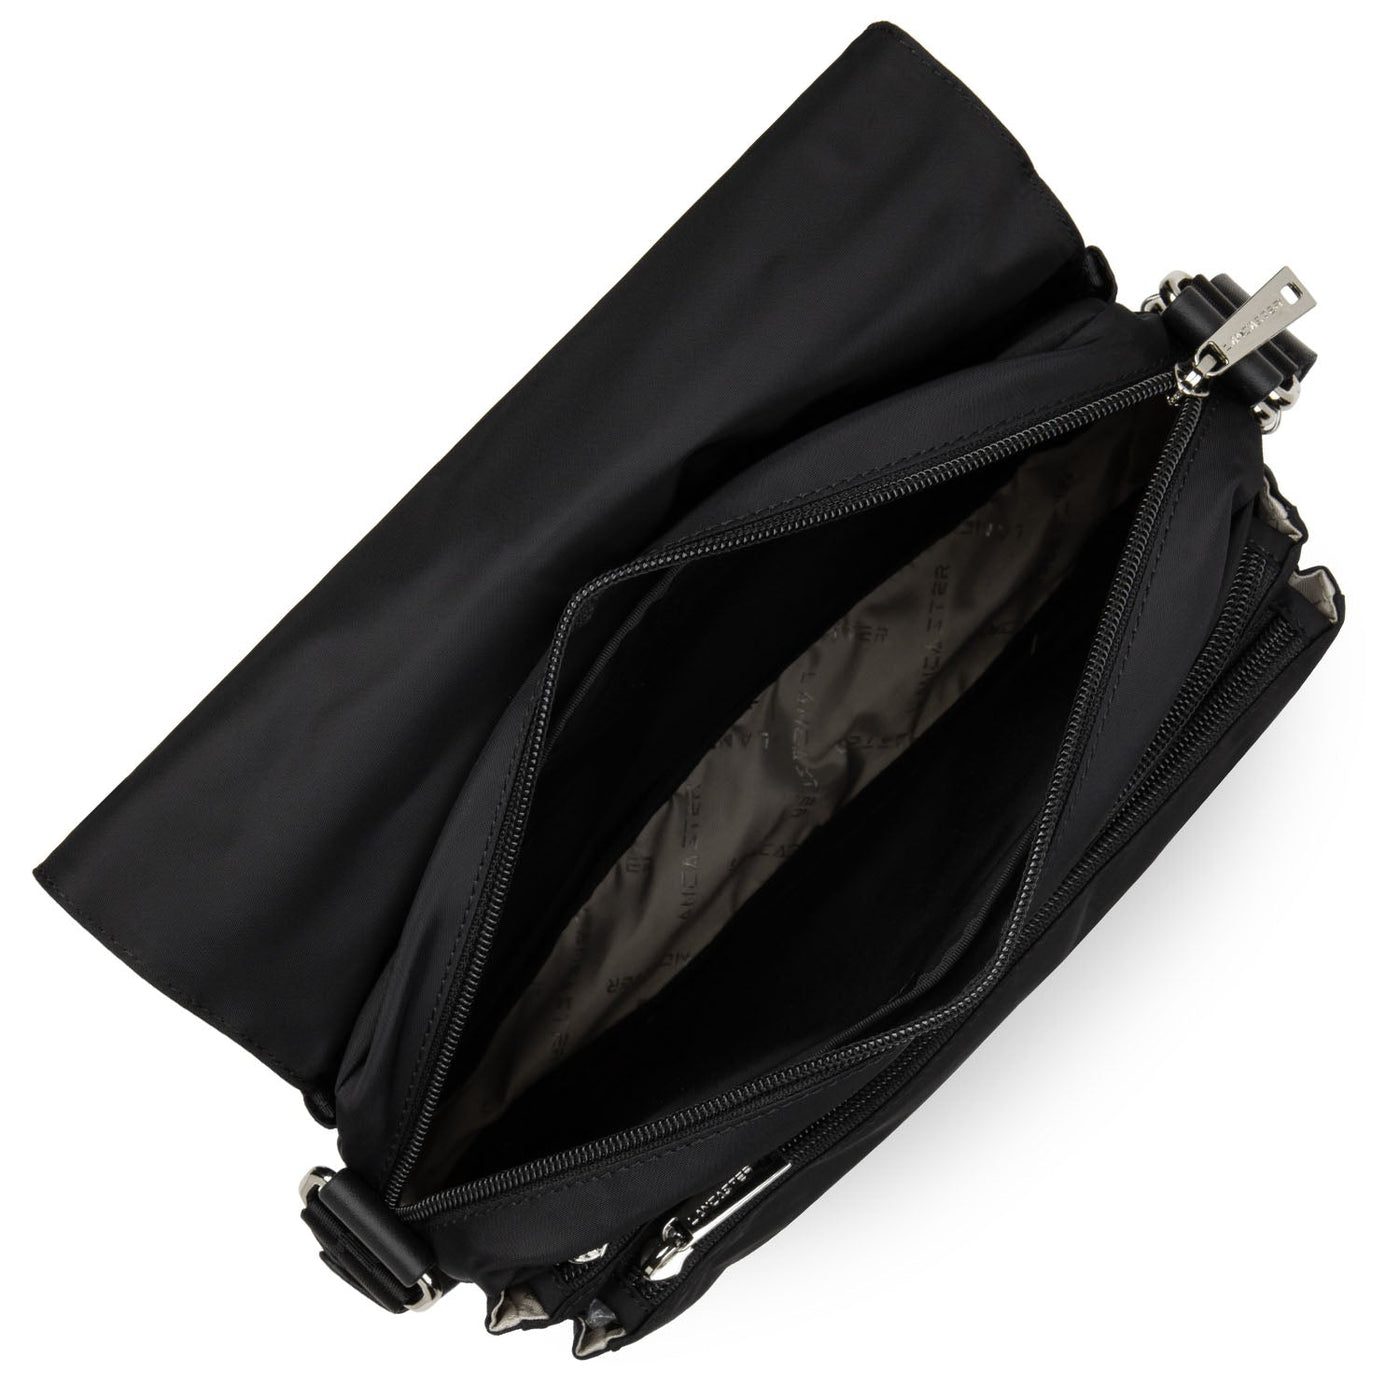 messenger bag - basic sport #couleur_noir